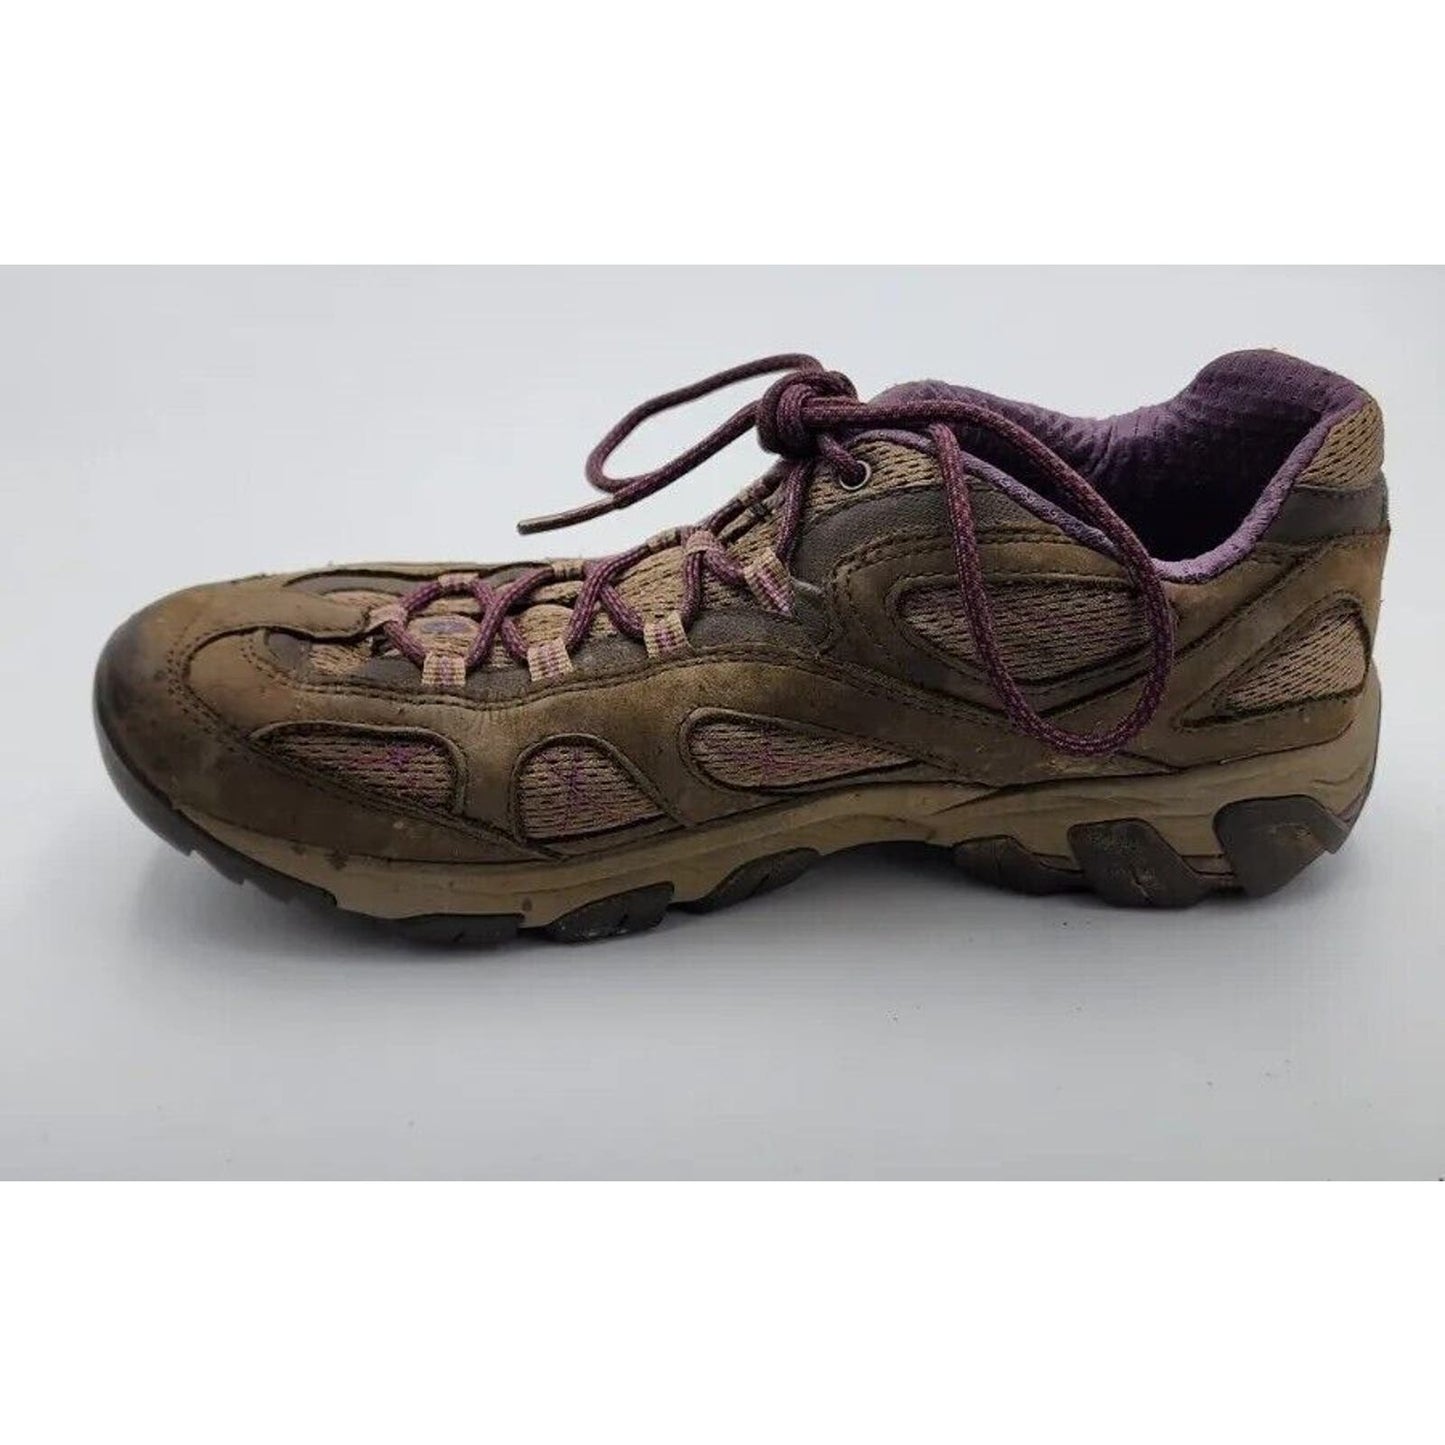 TEVA Genea Trail Hiking Sneaker Gray Pink Walking Comfort Padded Womens Size 8.5